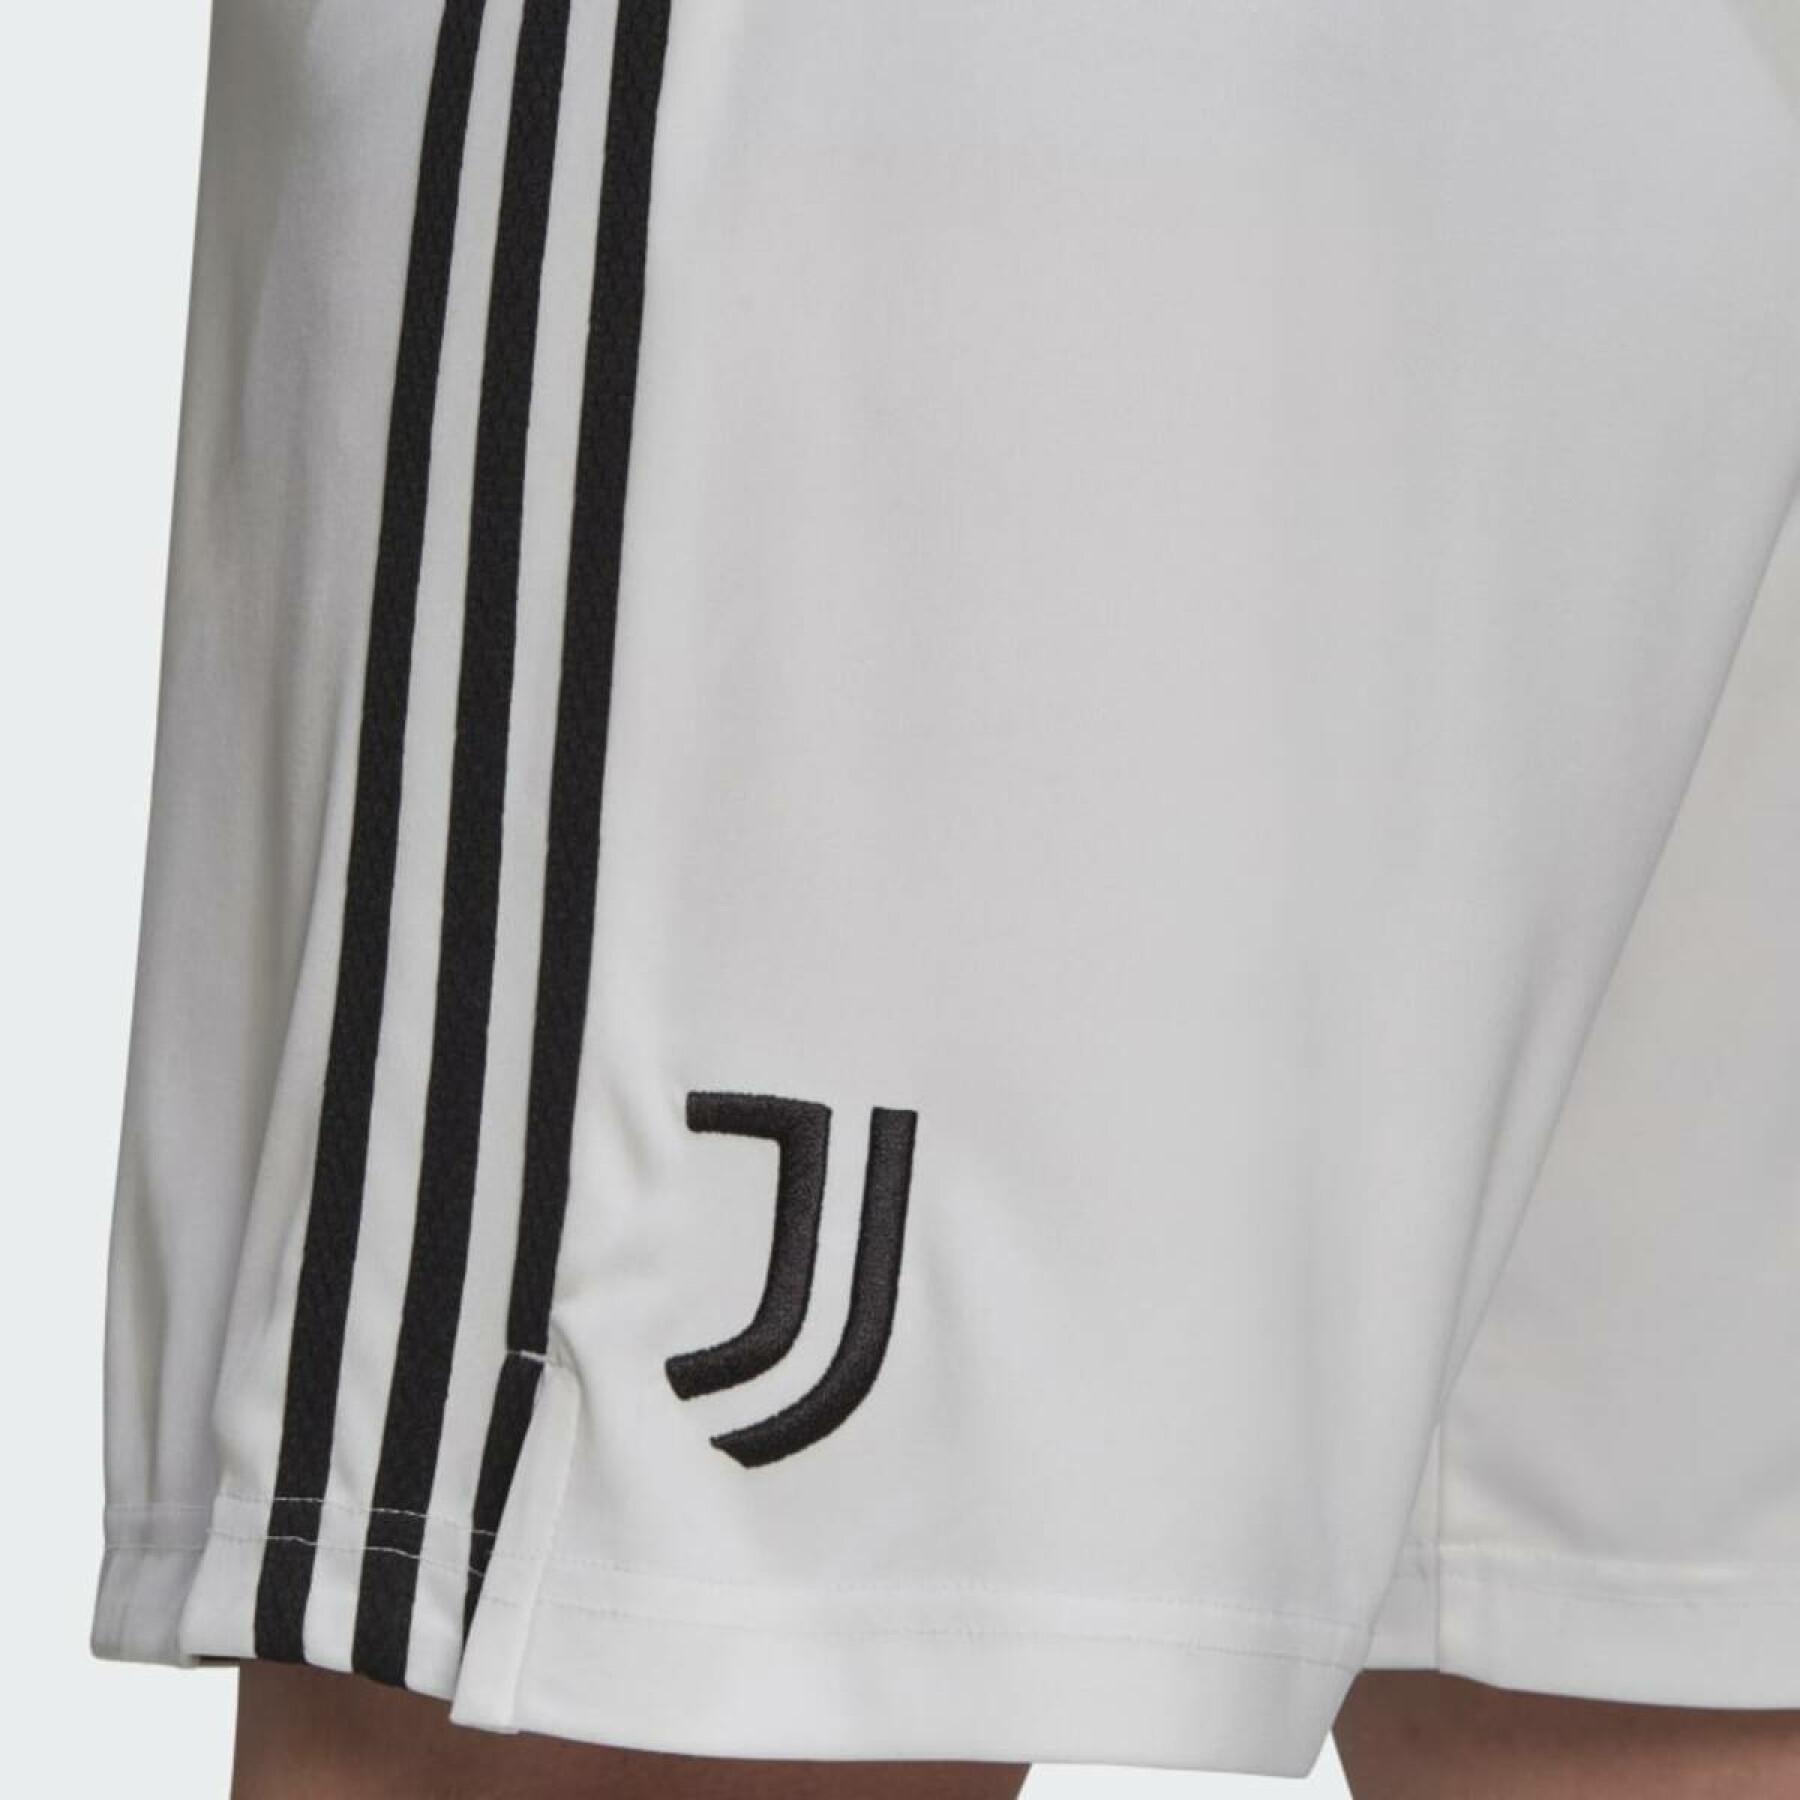 Thuisshort Juventus 2021/22